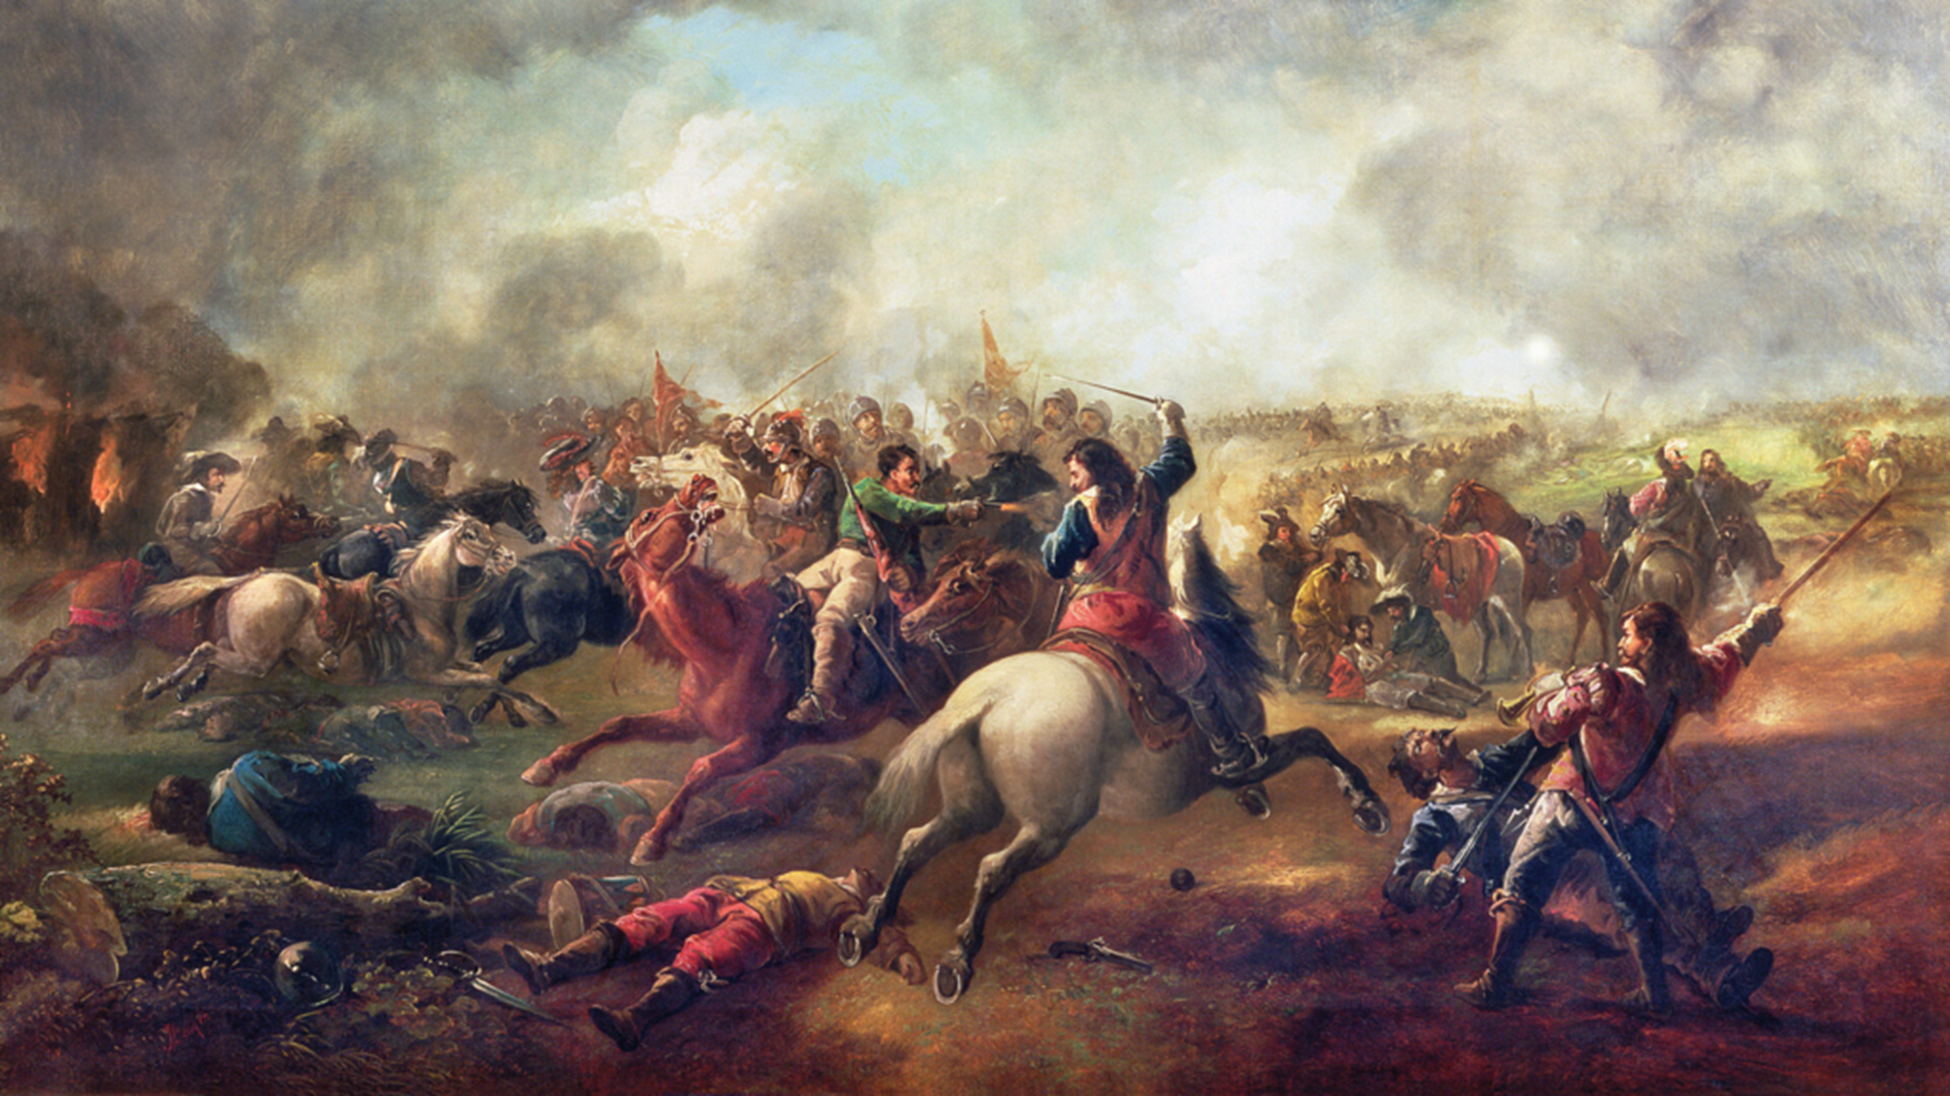 The English Civil War: A Wild Ride to Democracy